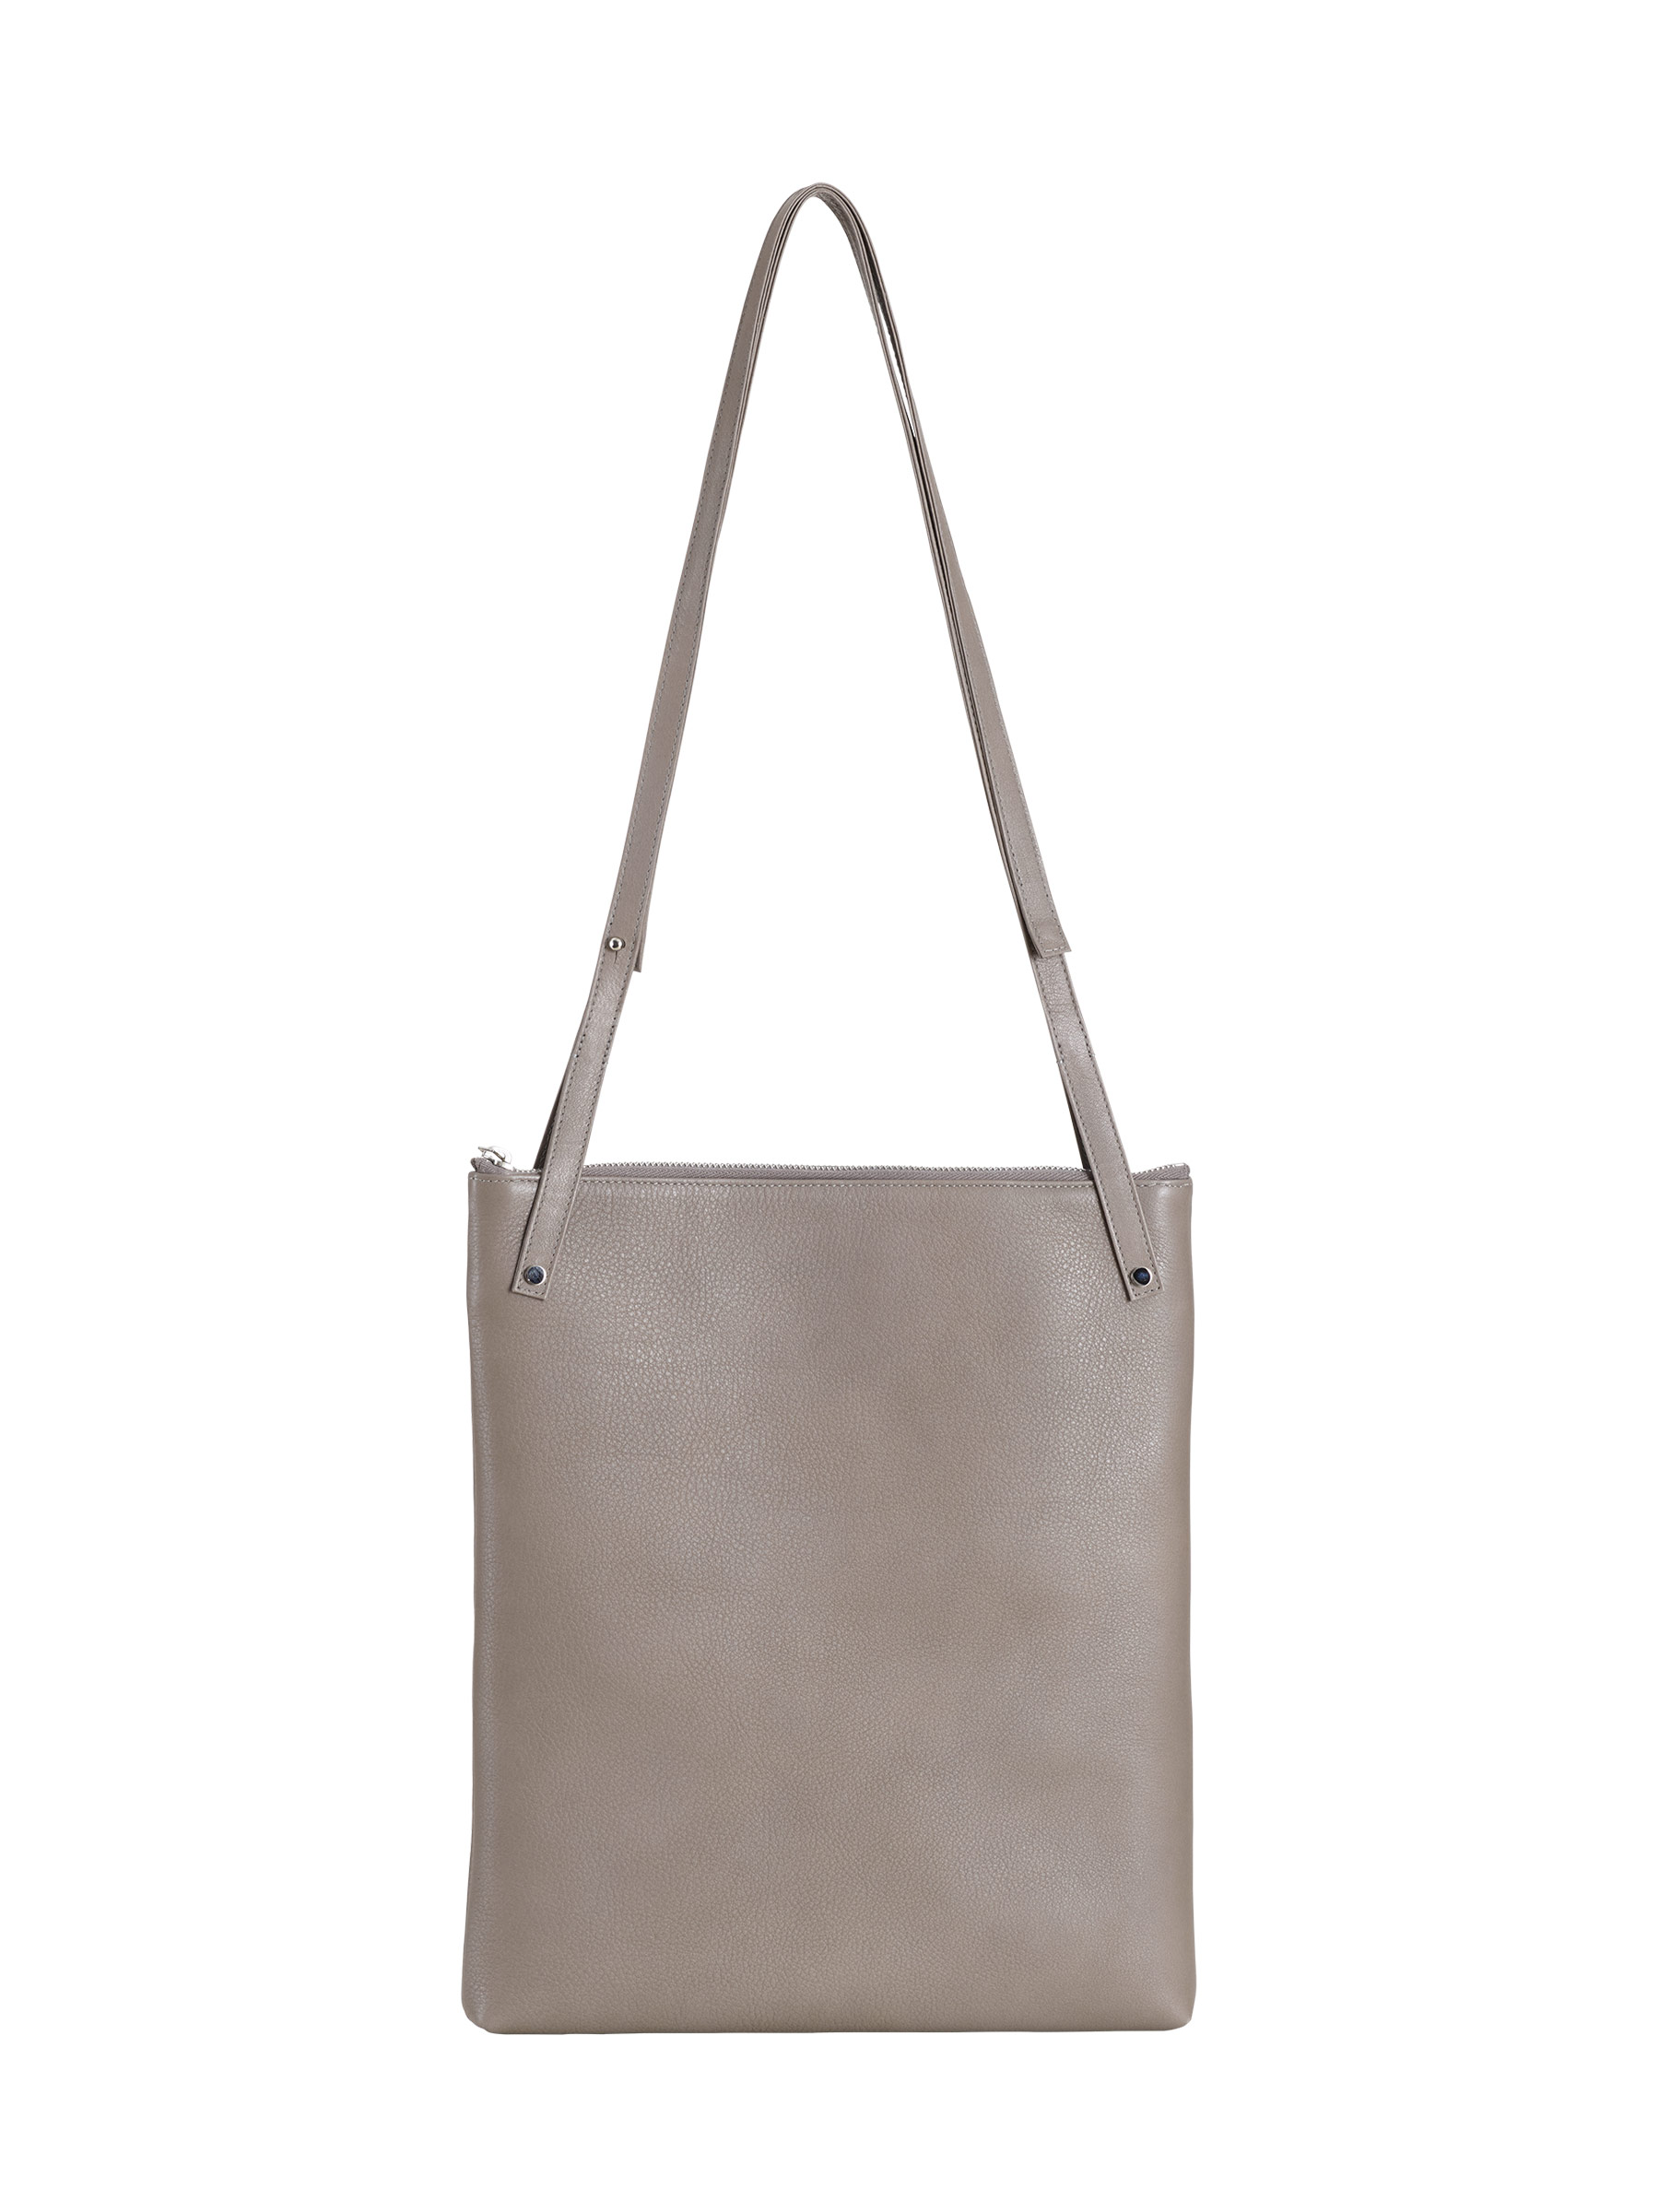 KRAMER 3 shoulder bag in grey calfskin leather | TSATSAS